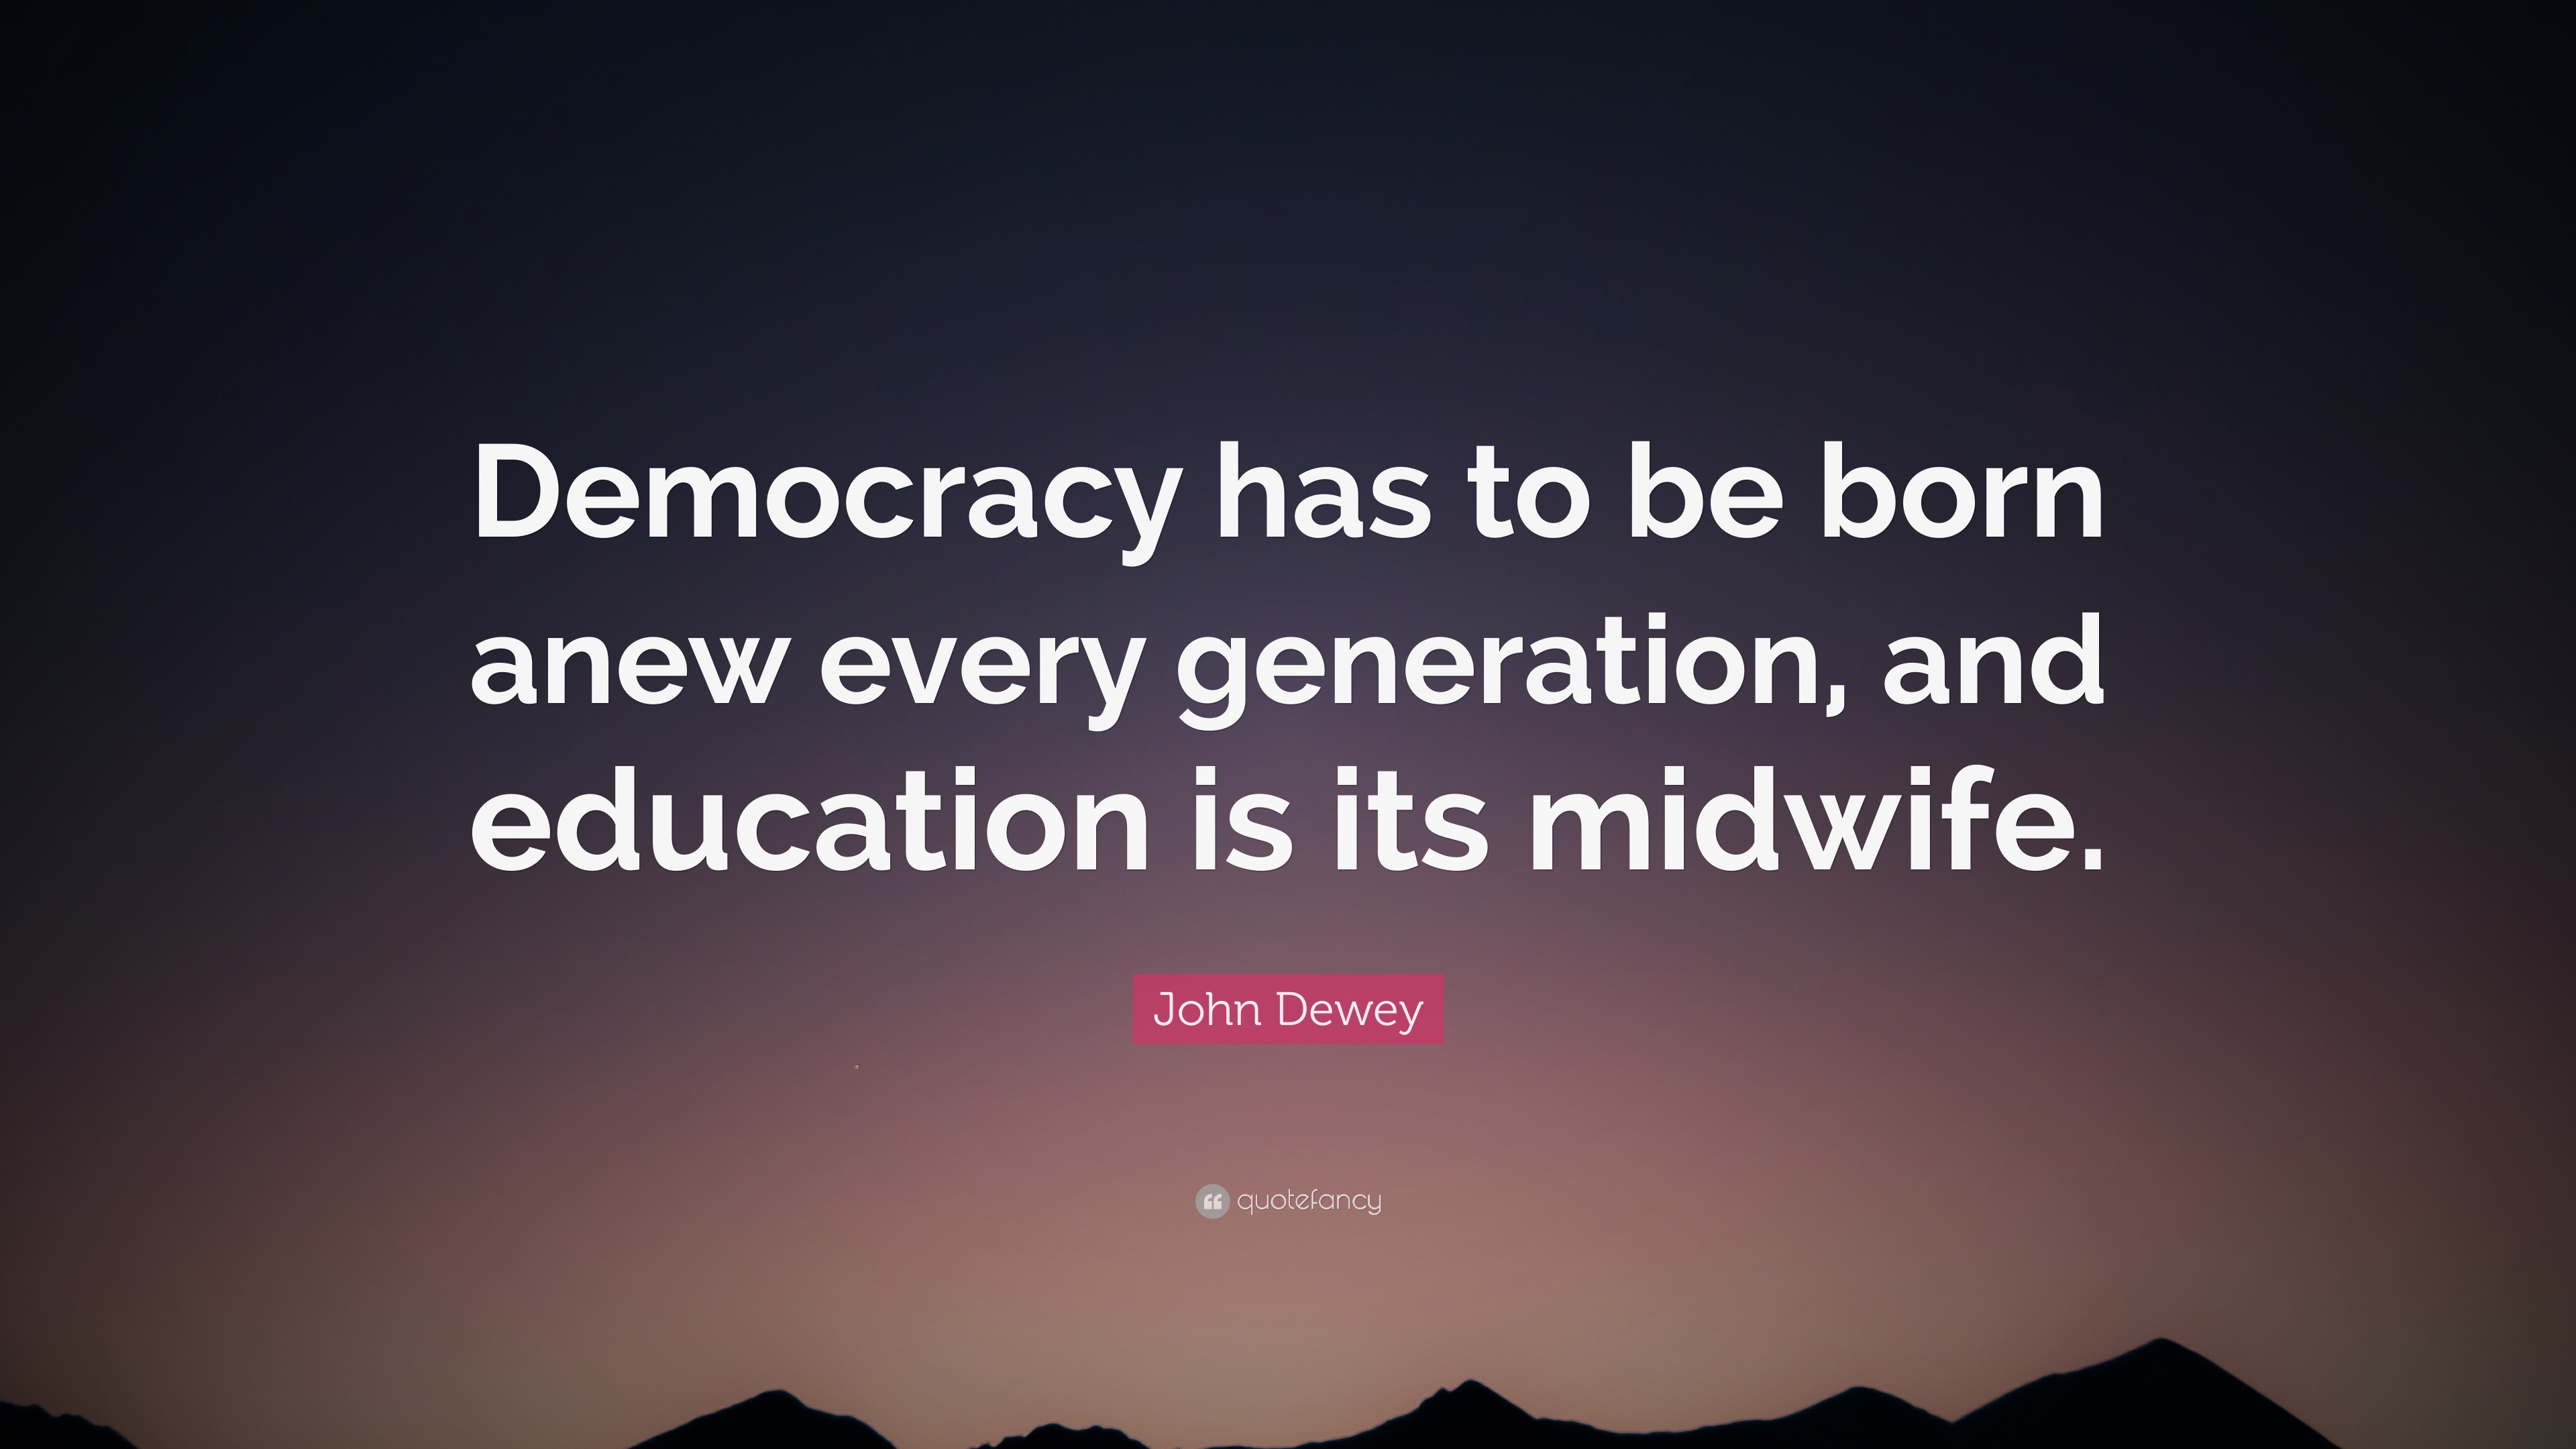 dewey john democracy and education